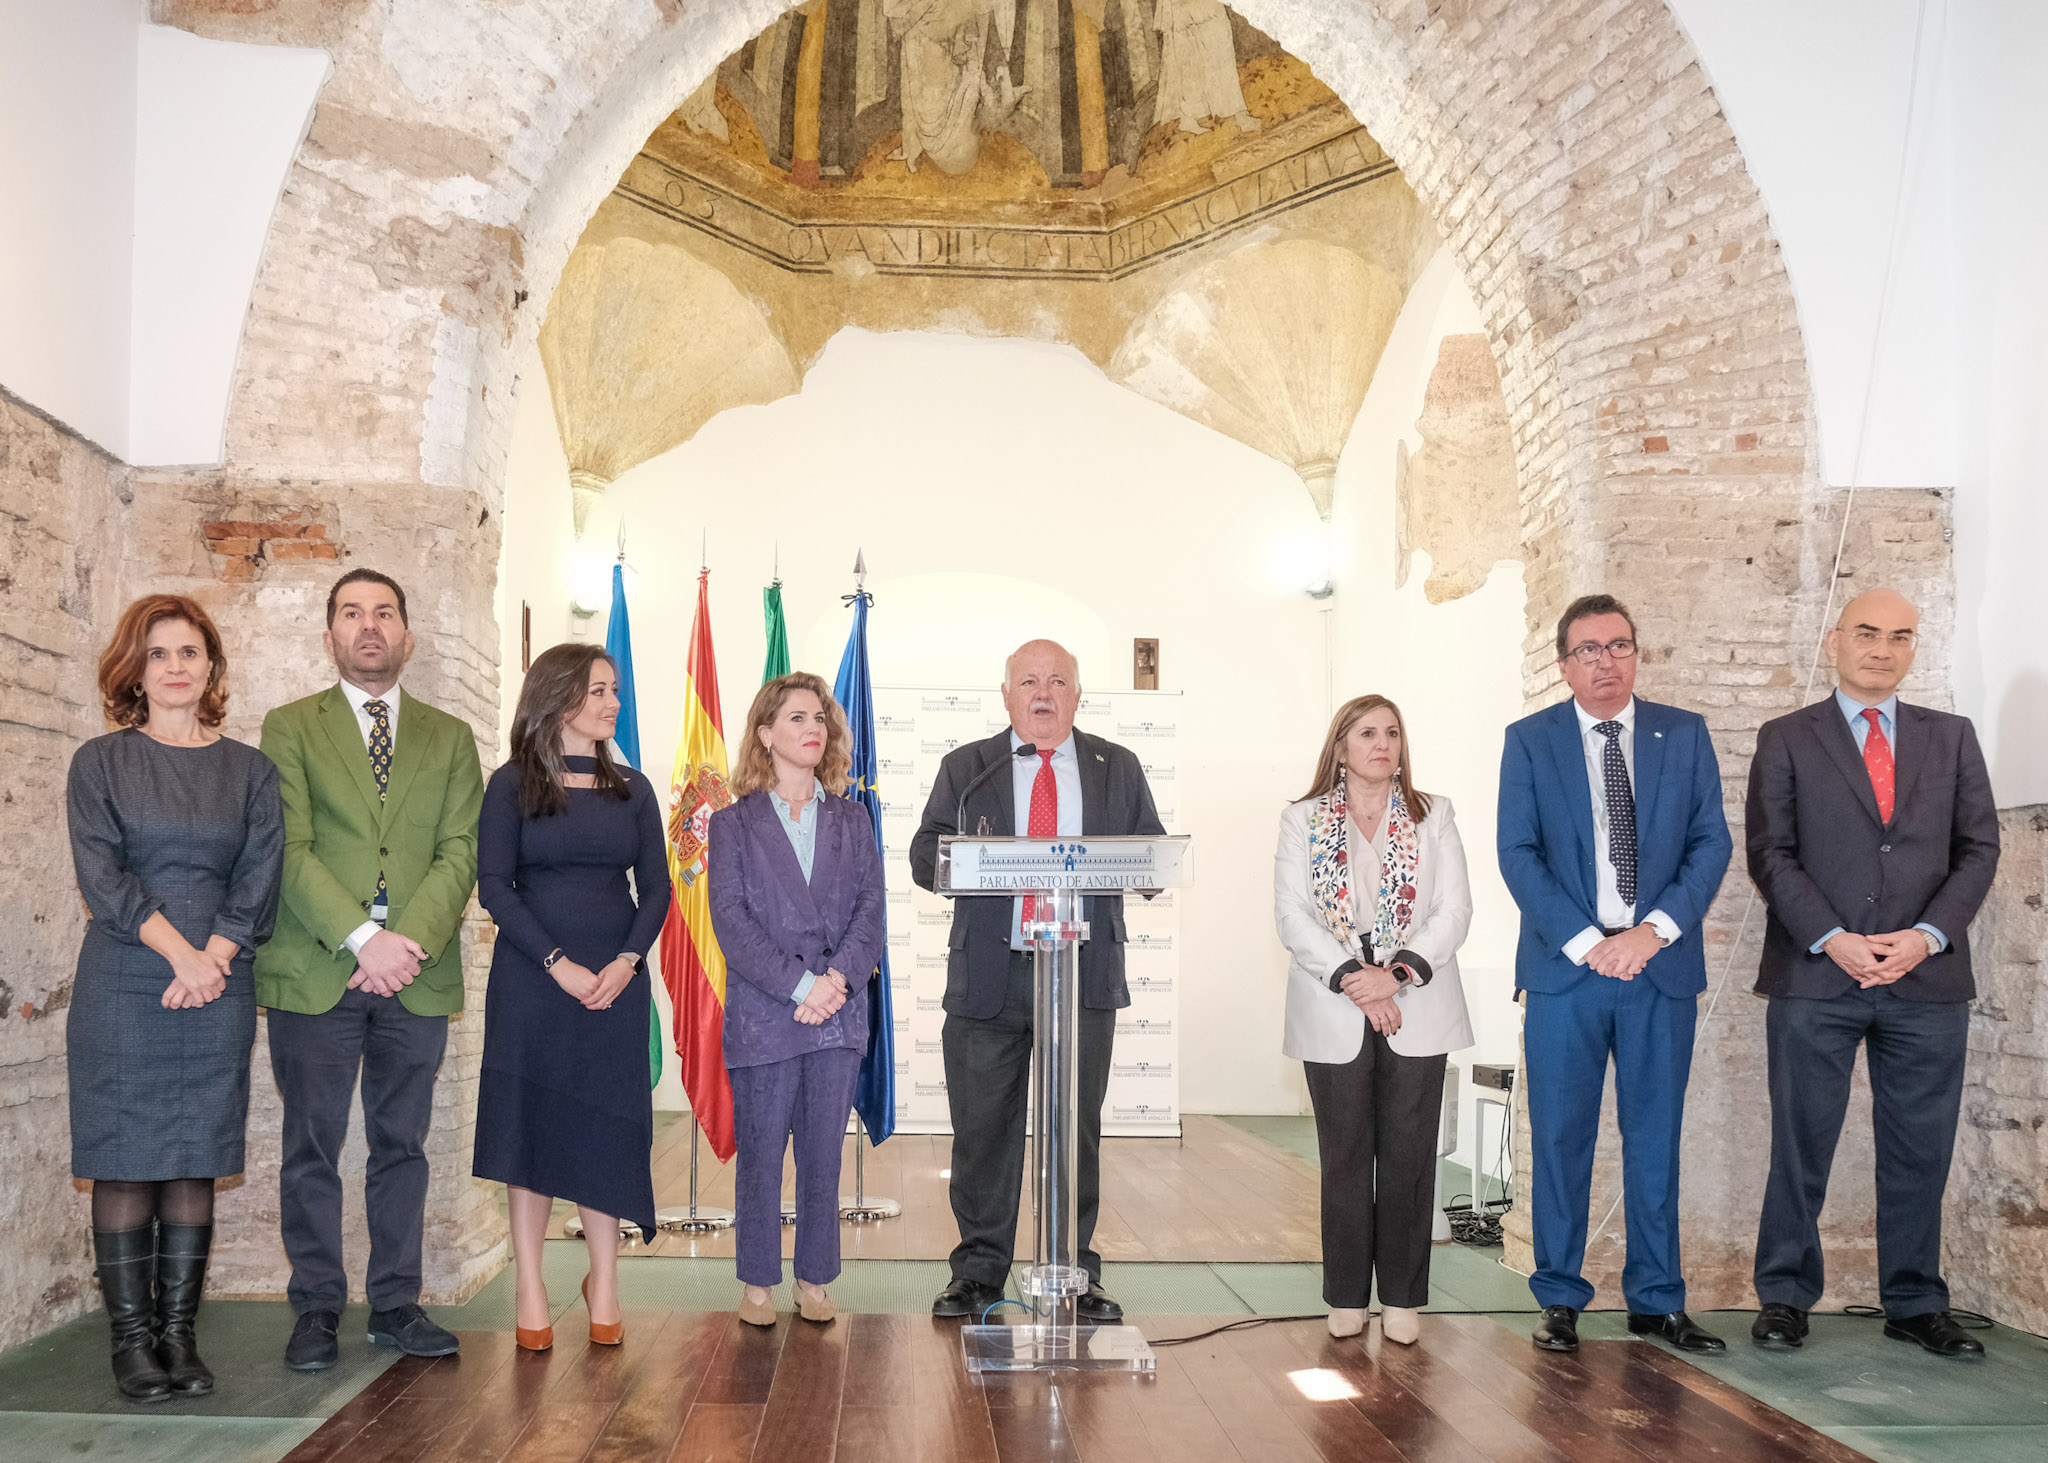  Tras la reunin de la Mesa, el presidente del Parlamento ha atendido a los medios de comunicacin en la capilla de San Cristbal de Lepe (Huelva)
 